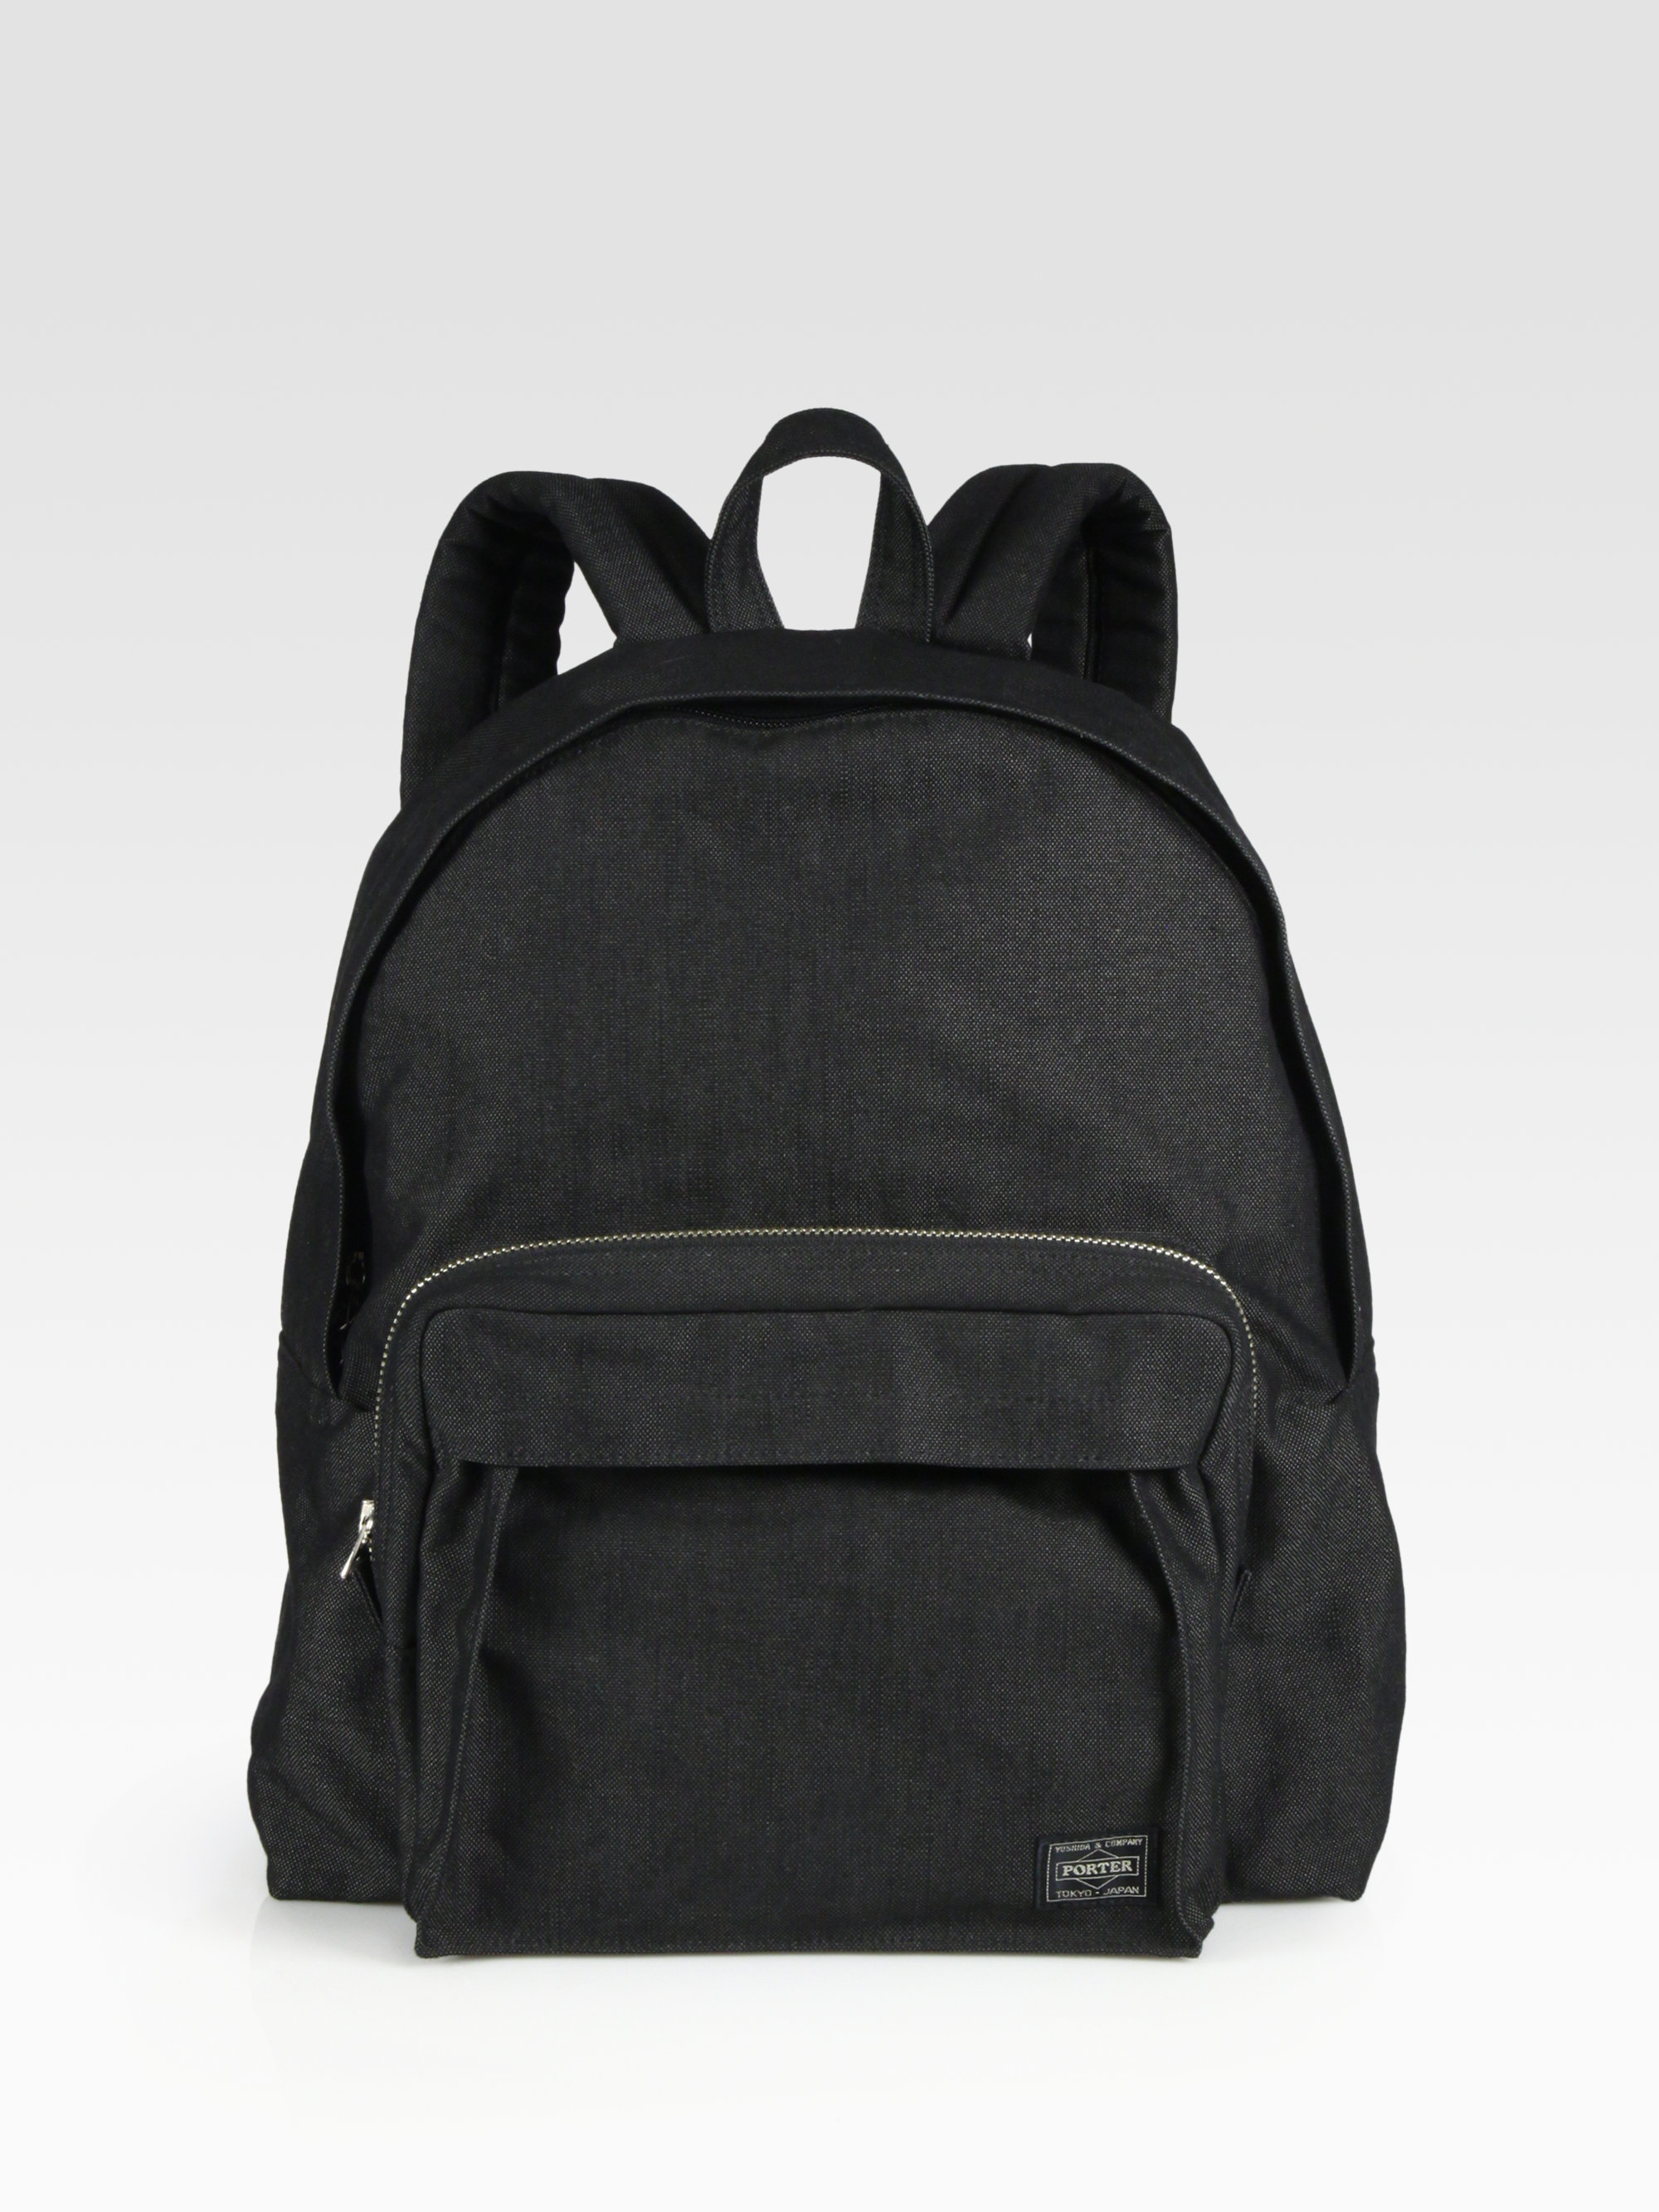 Lyst - Porter Smoky Backpack in Black